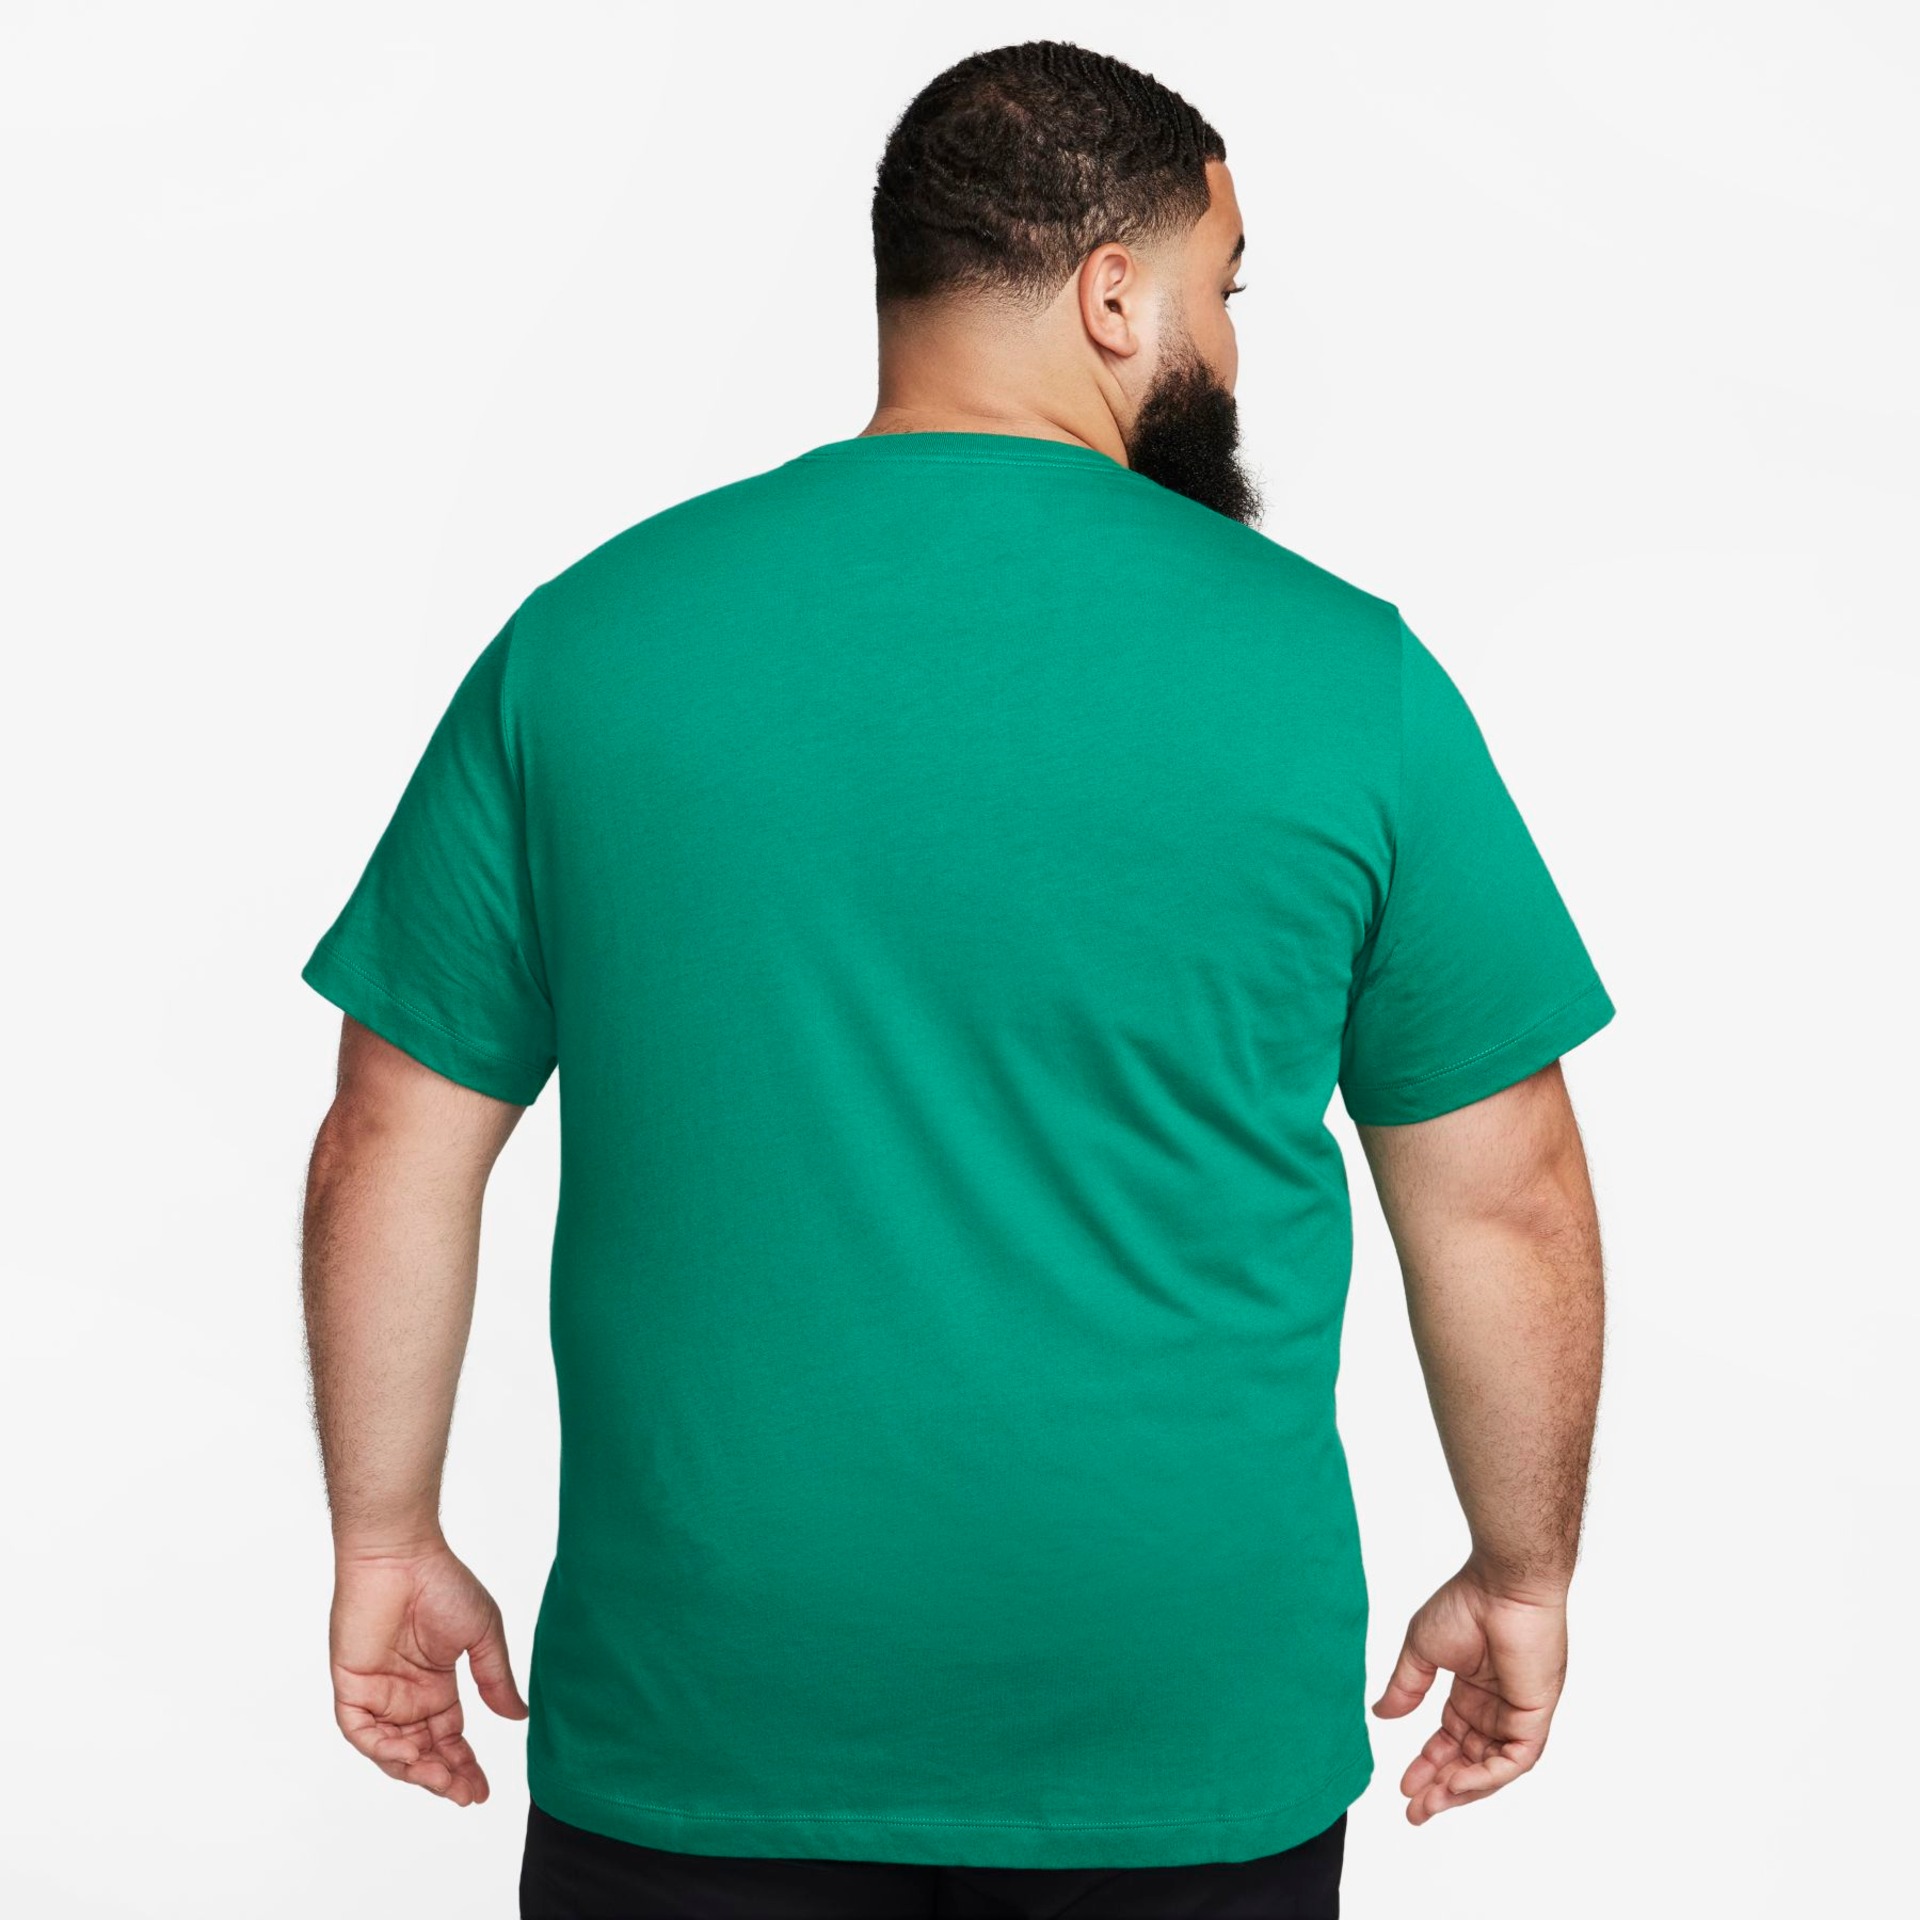 Camiseta Nike Sportswear Connect Masculina - Foto 7